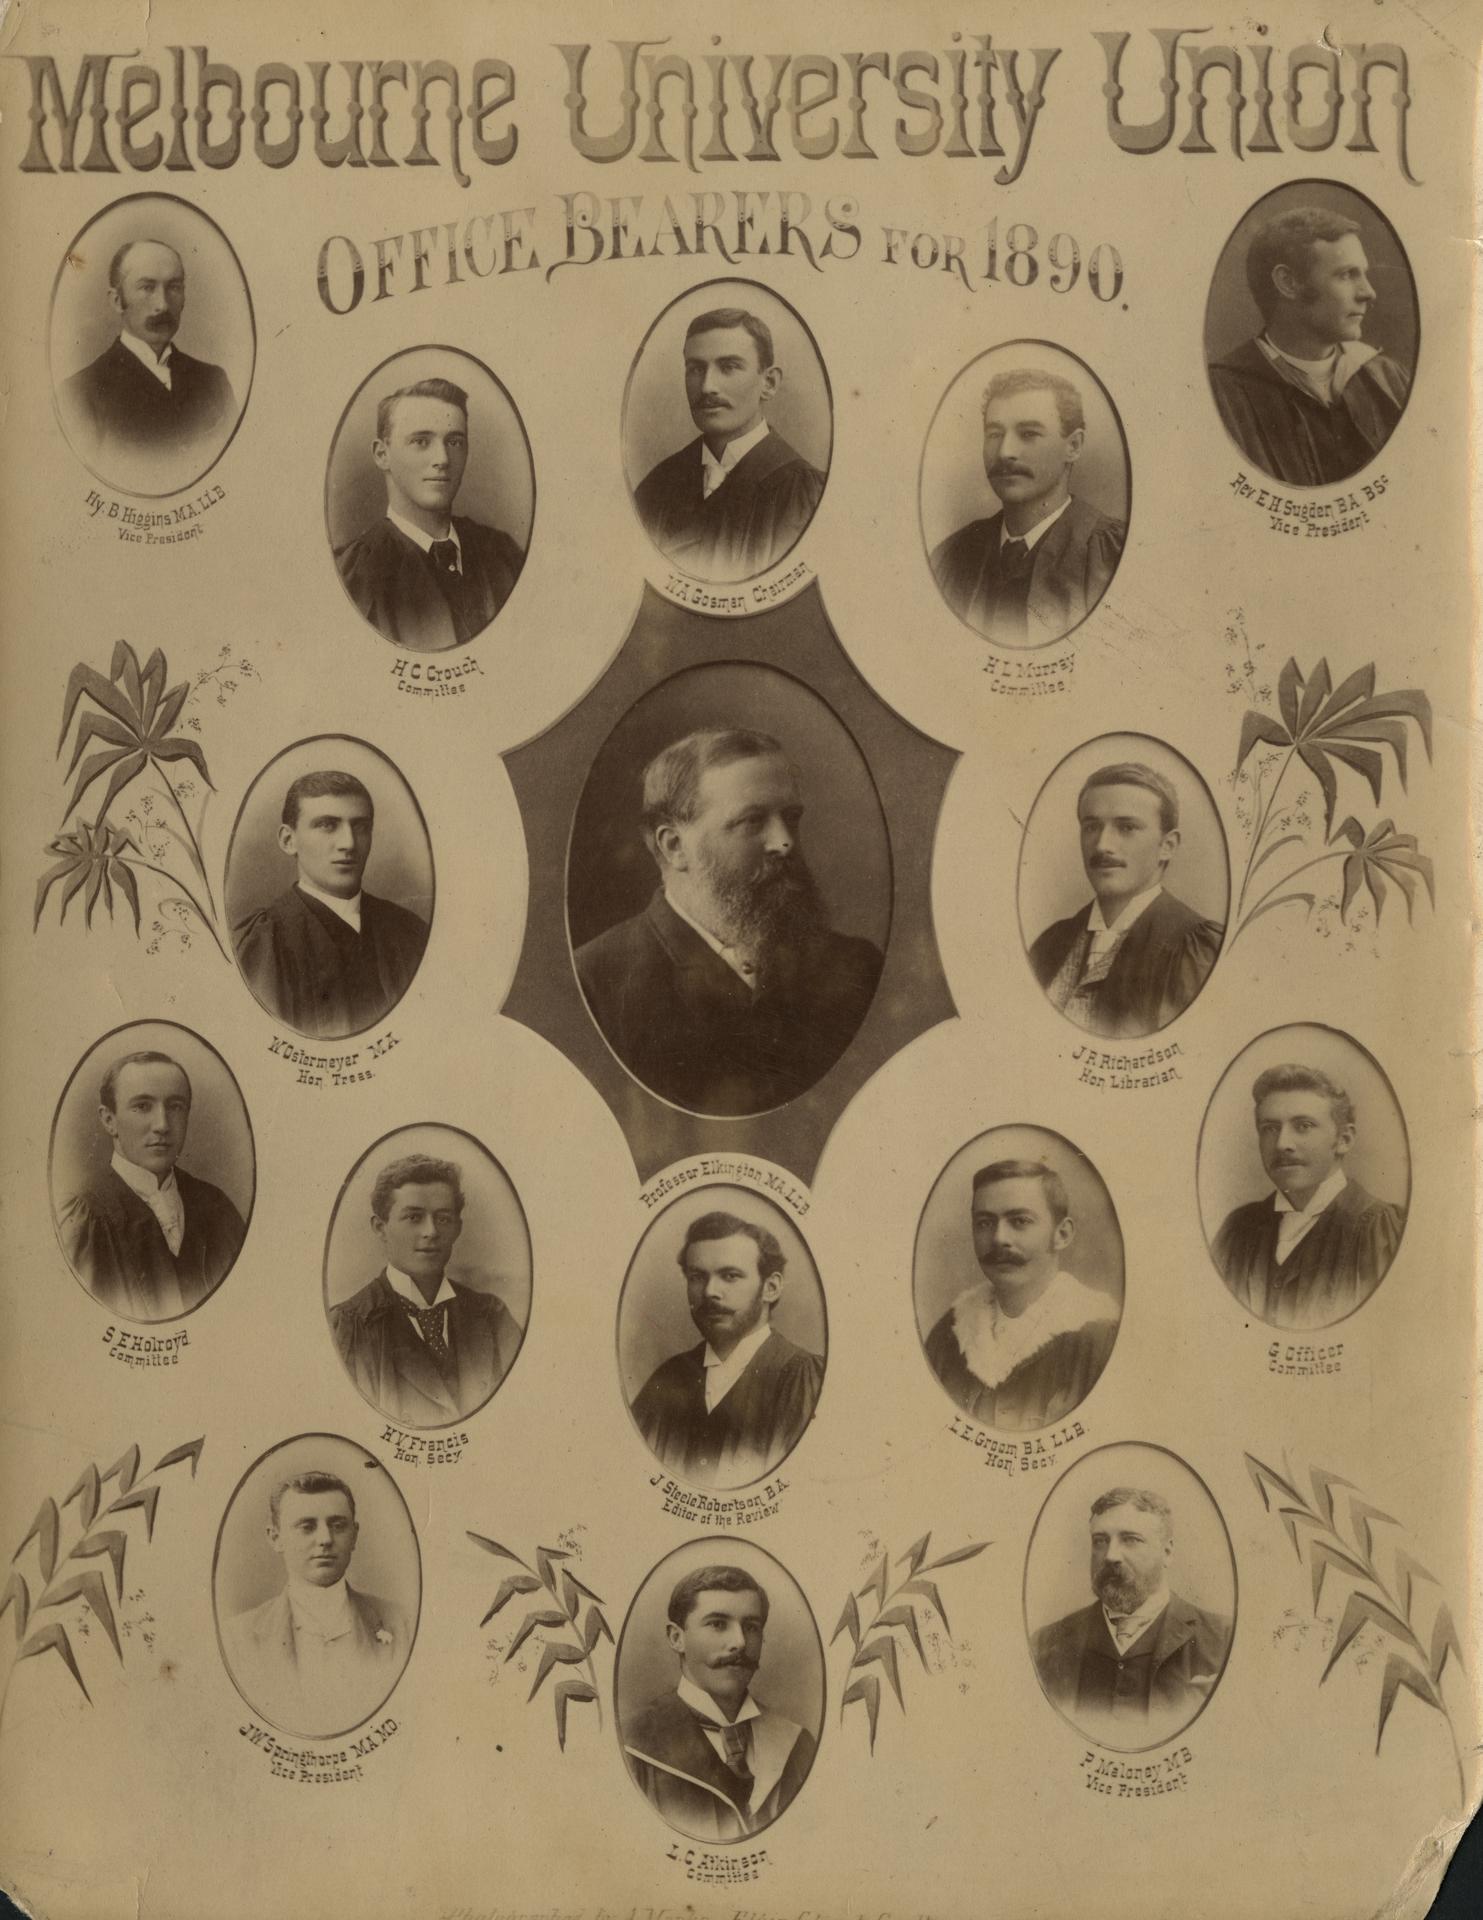 Union Office Bearers, 1890